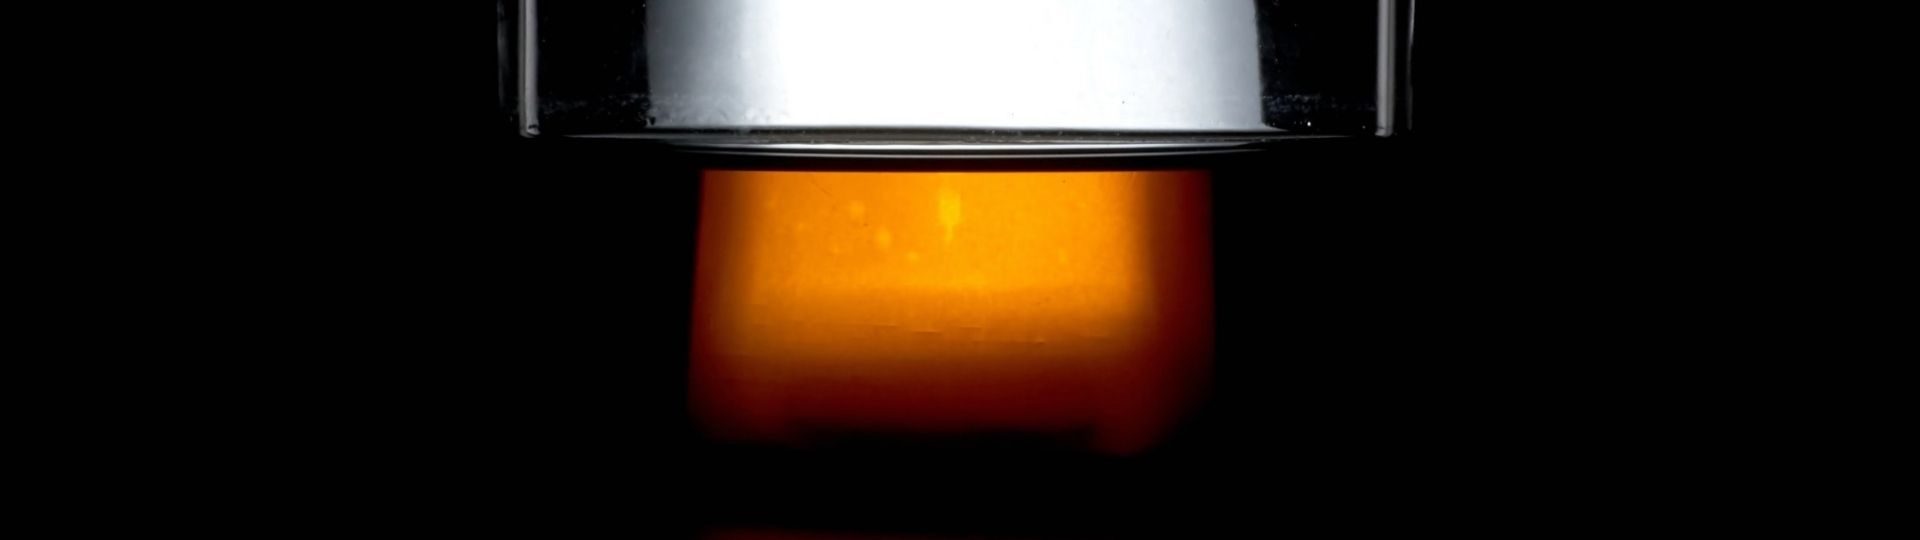 whisky in a glass | Liquori e distillati senza glutine | foto mathew schwartz unsplash